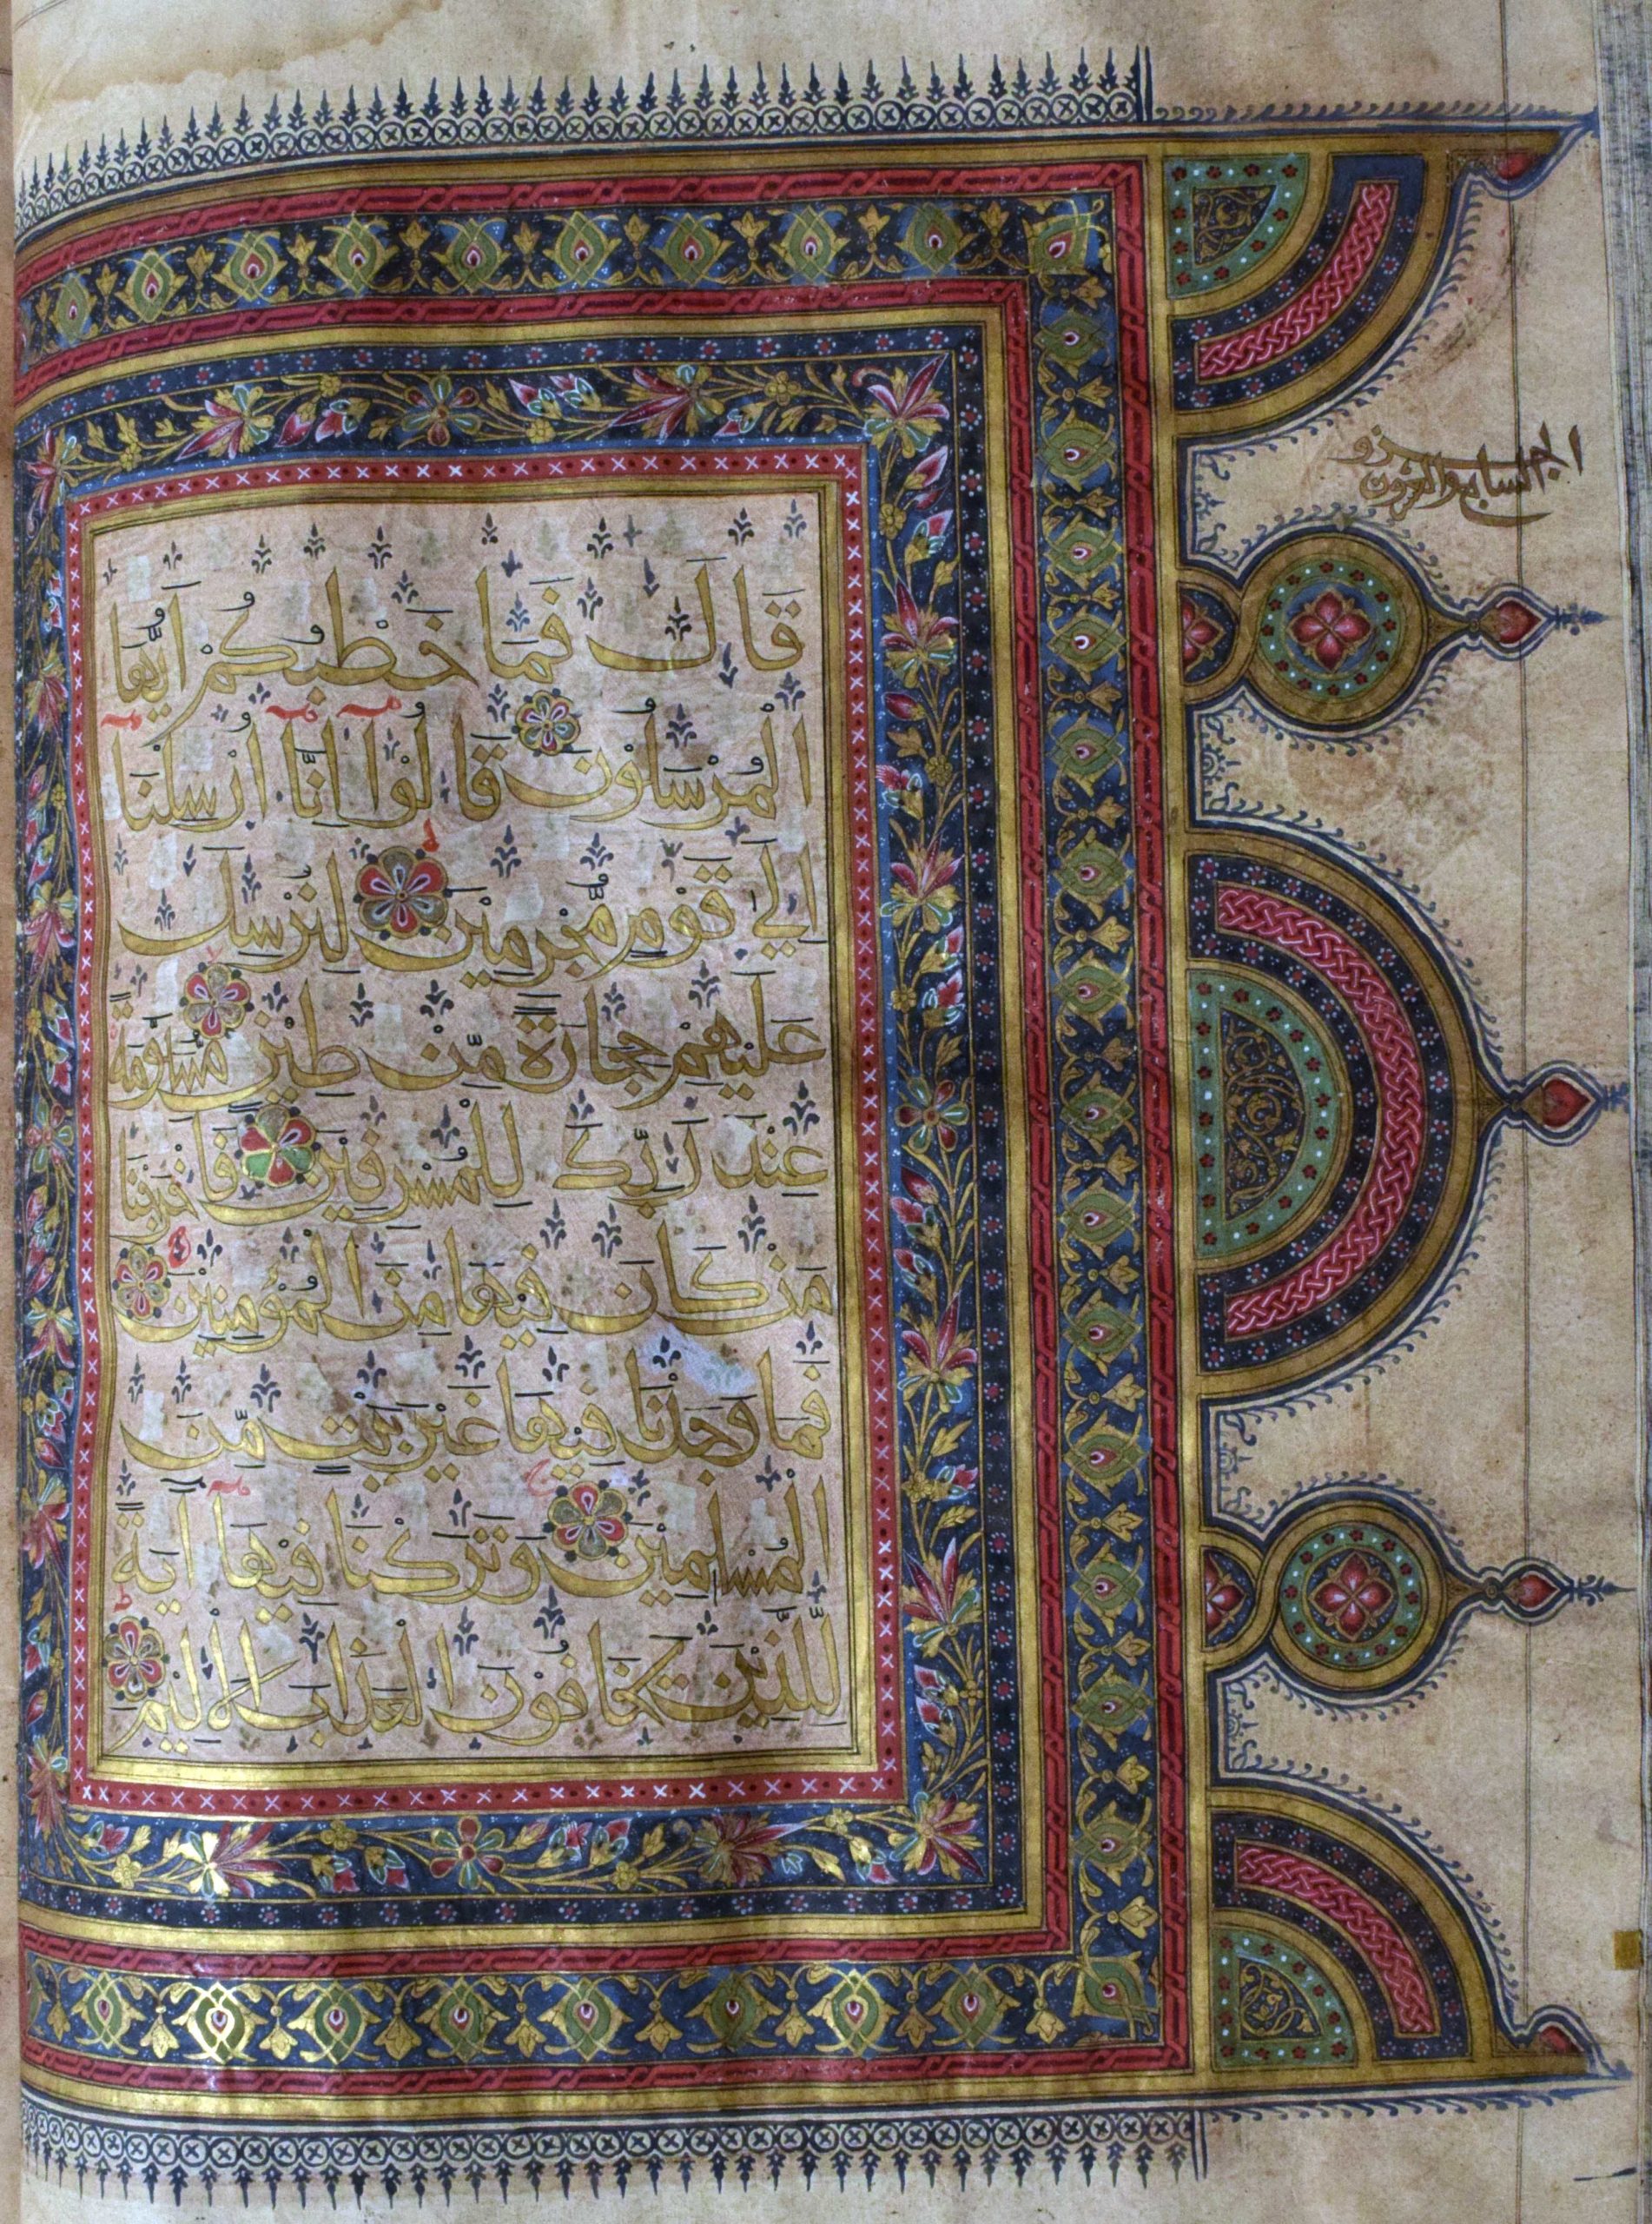 Bihari Qur'an (Photograph courtesy of the National Museum of Pakistan, Karachi - NM.1957.1033)